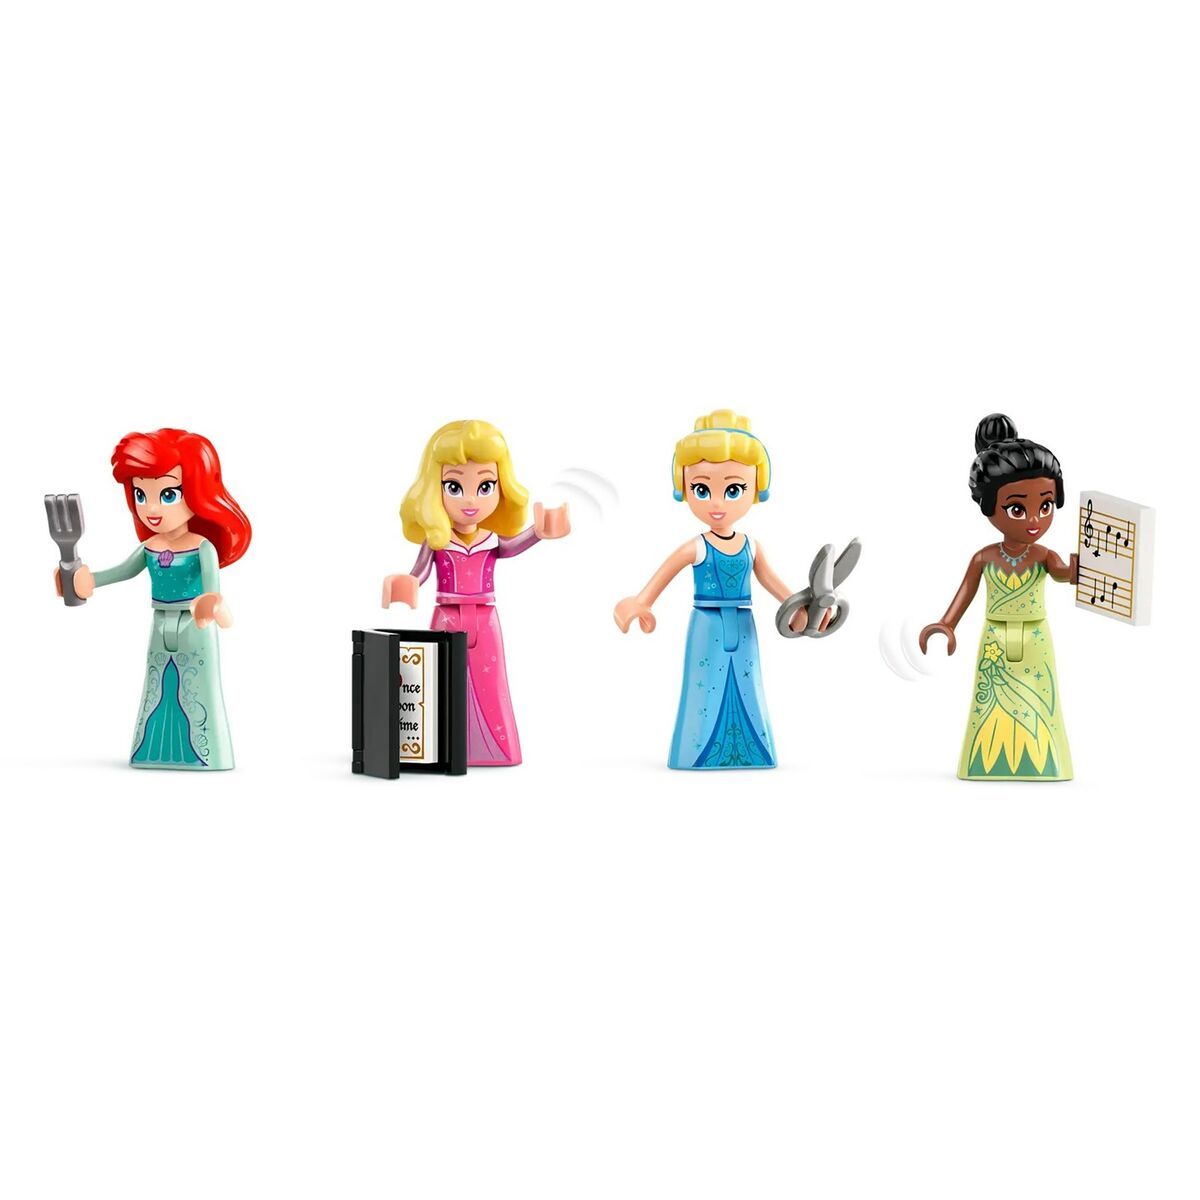 Playset Lego 43246 Disney Princess Market Adventure - Disponibile in 3-4 giorni lavorativi